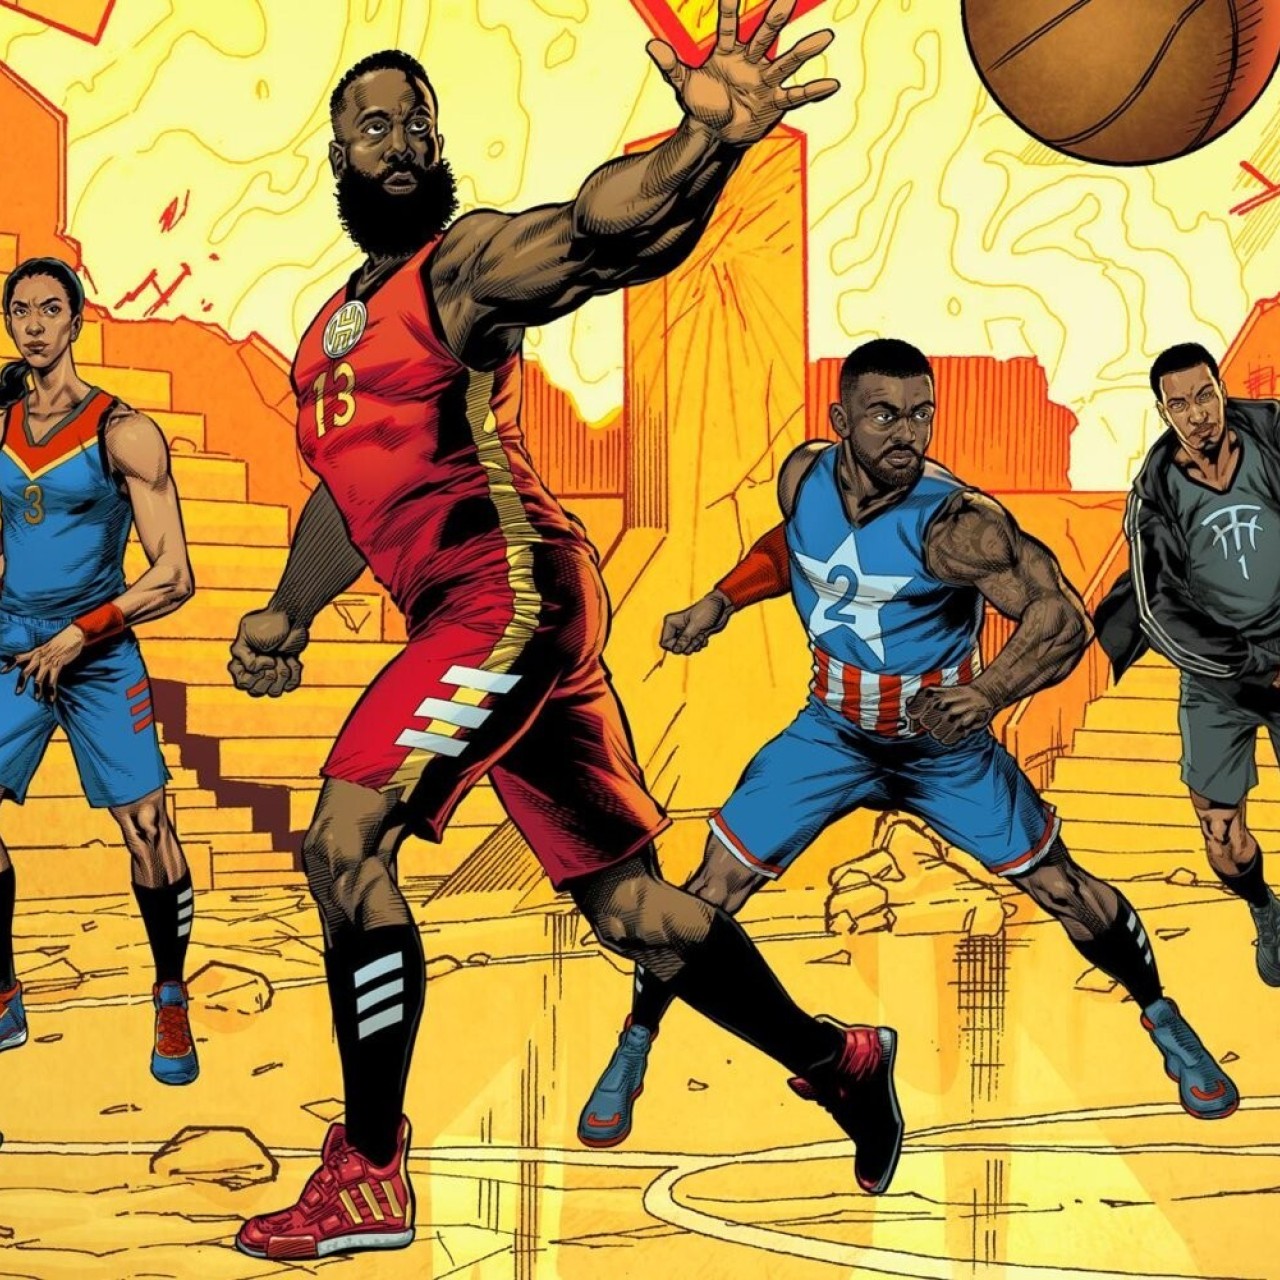 Marvel x Adidas shoes recast basketball superstars as Avengers superheroes  - YP